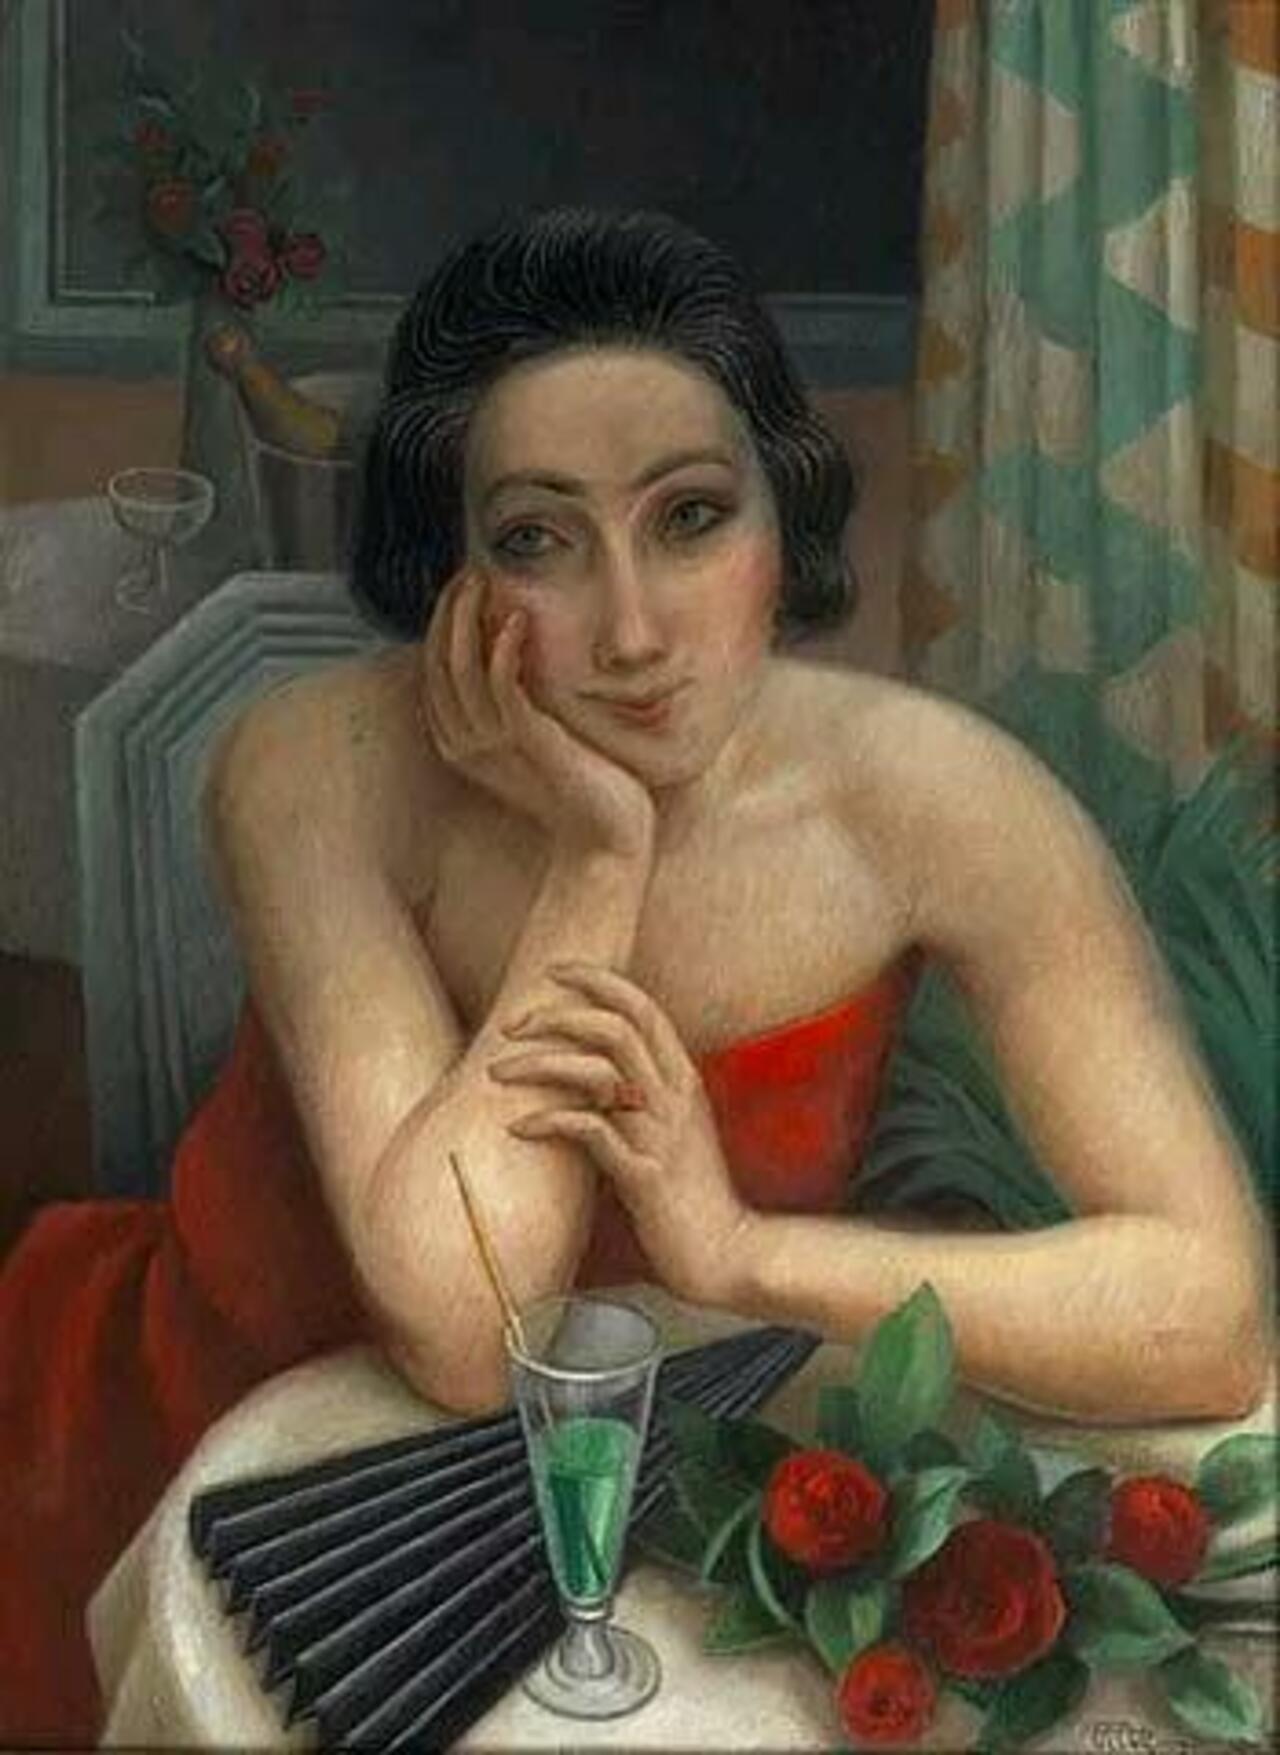 RT @Papryka5: Jean Metzinger, Jeune femme pensive aux roses rouges, 1923 - #Art #twitart 
#DonneInArte #ArtLovers 
#buonanotte http://t.co/E0U2Drkbsi